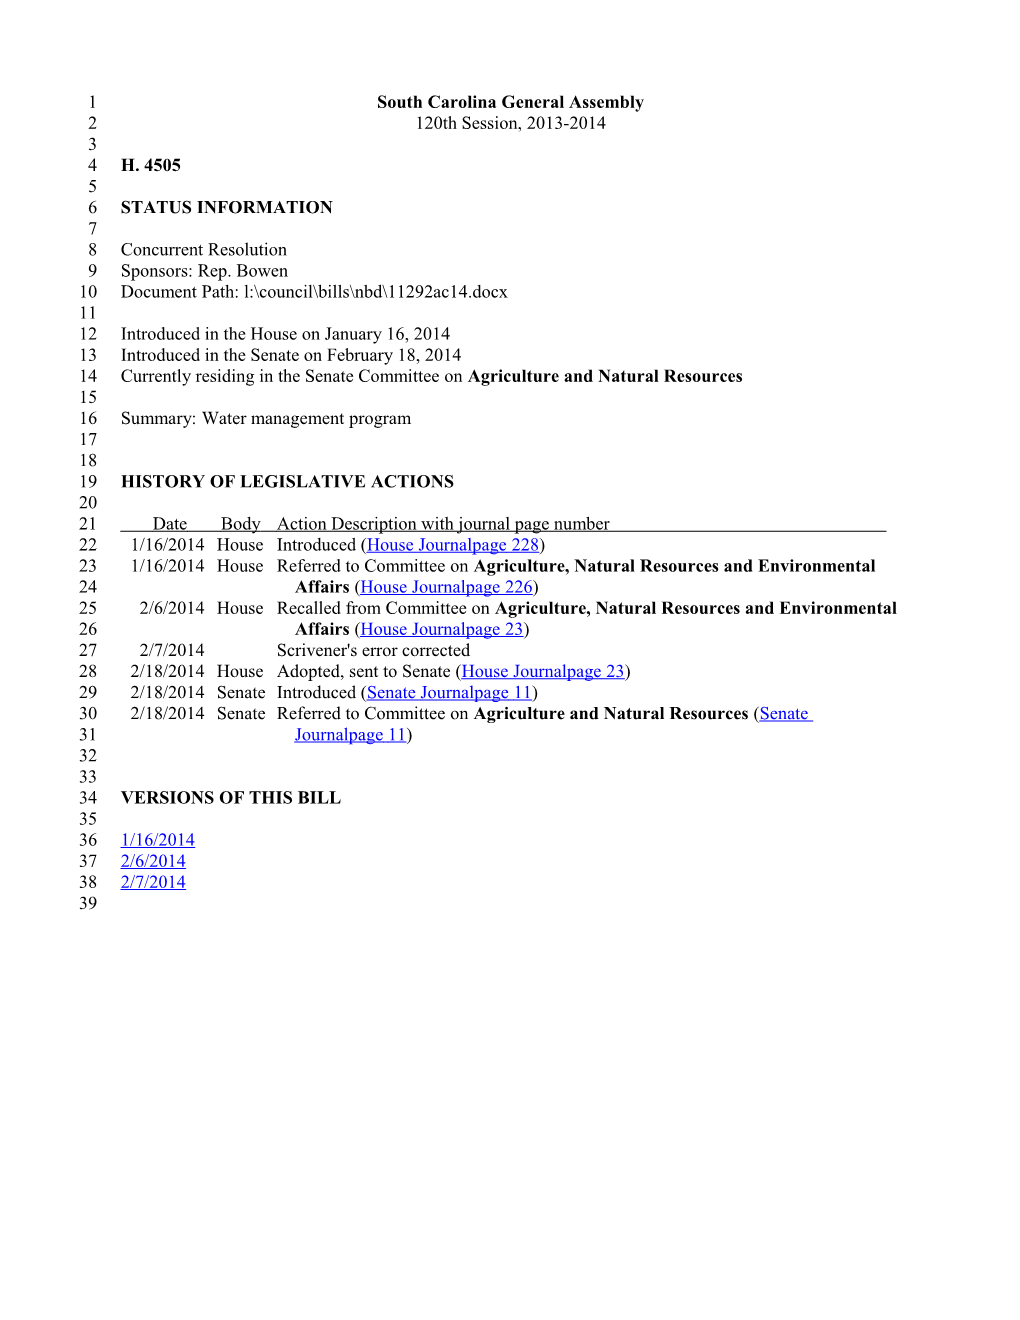 2013-2014 Bill 4505: Water Management Program - South Carolina Legislature Online